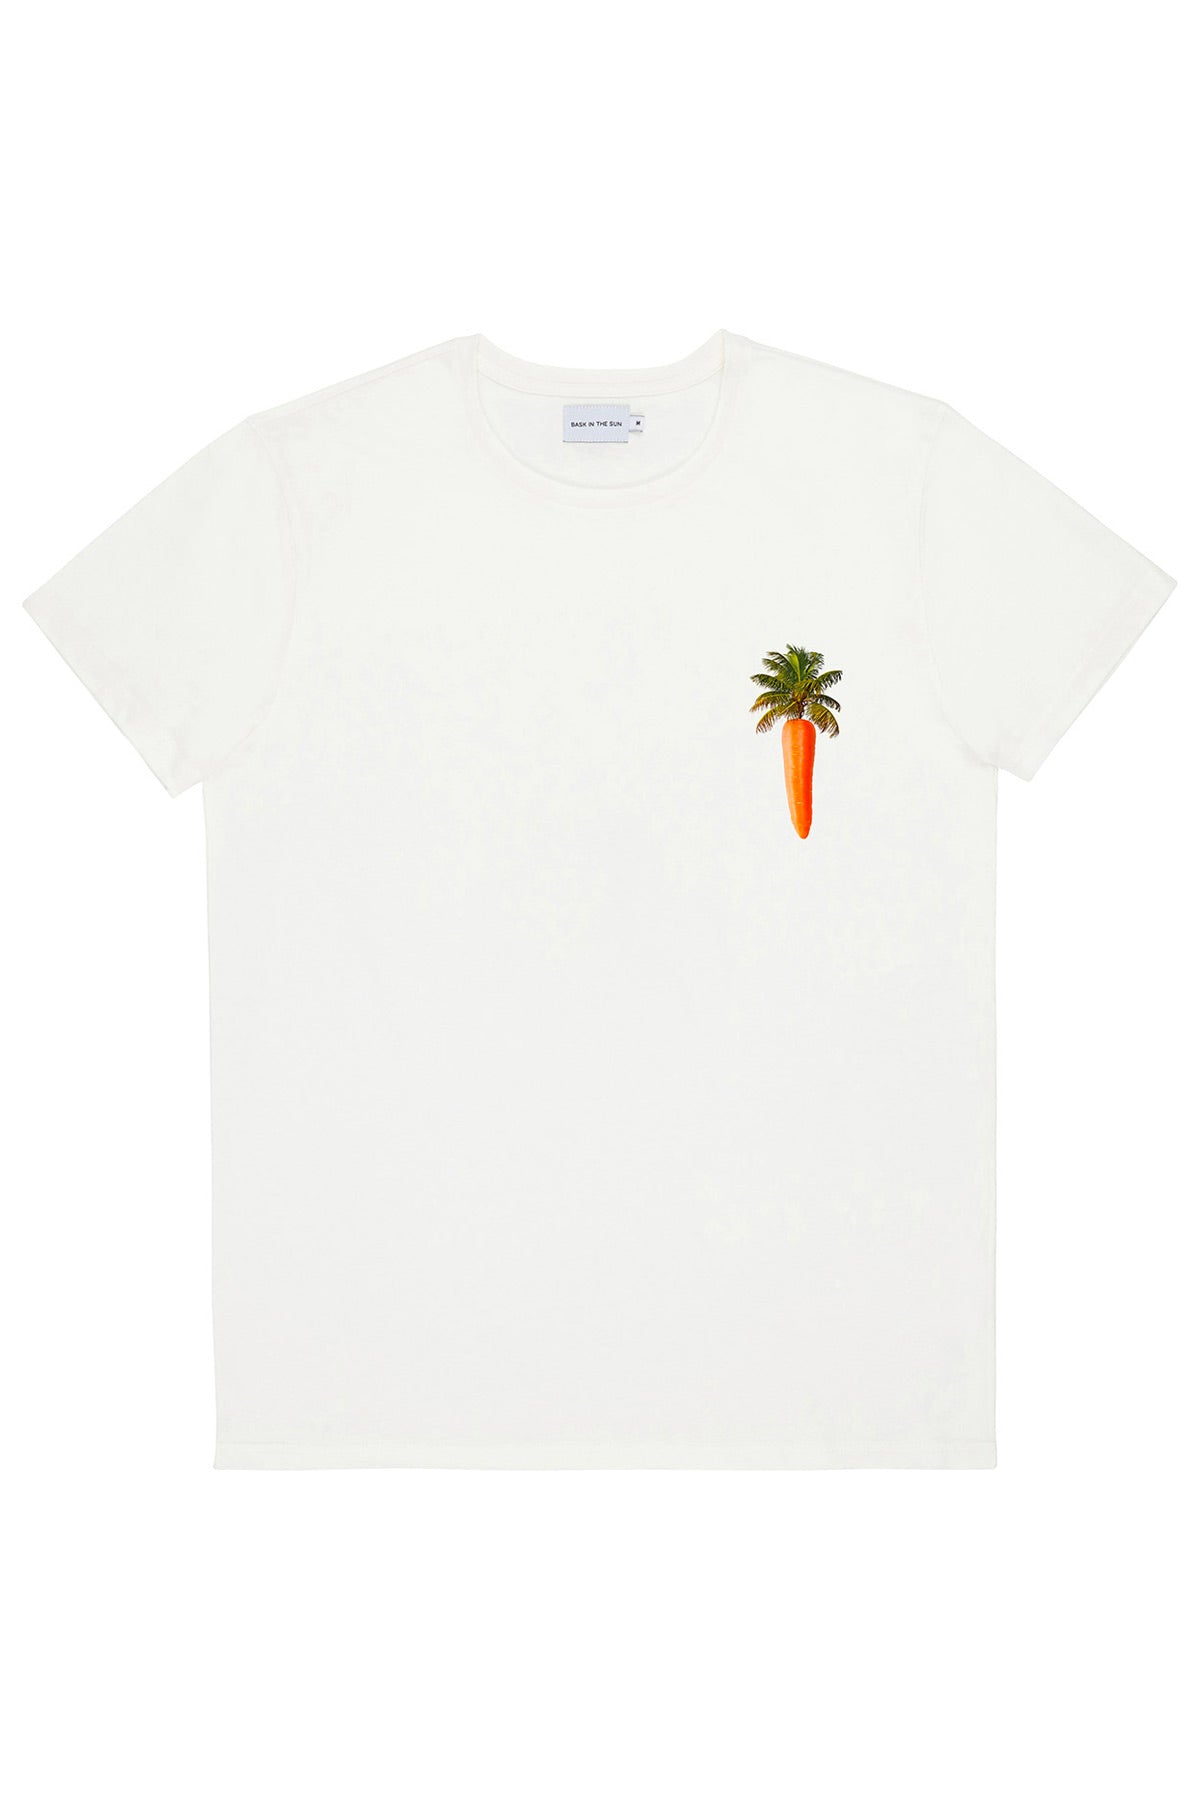 T-shirt Palm Carrot - bask in the sun